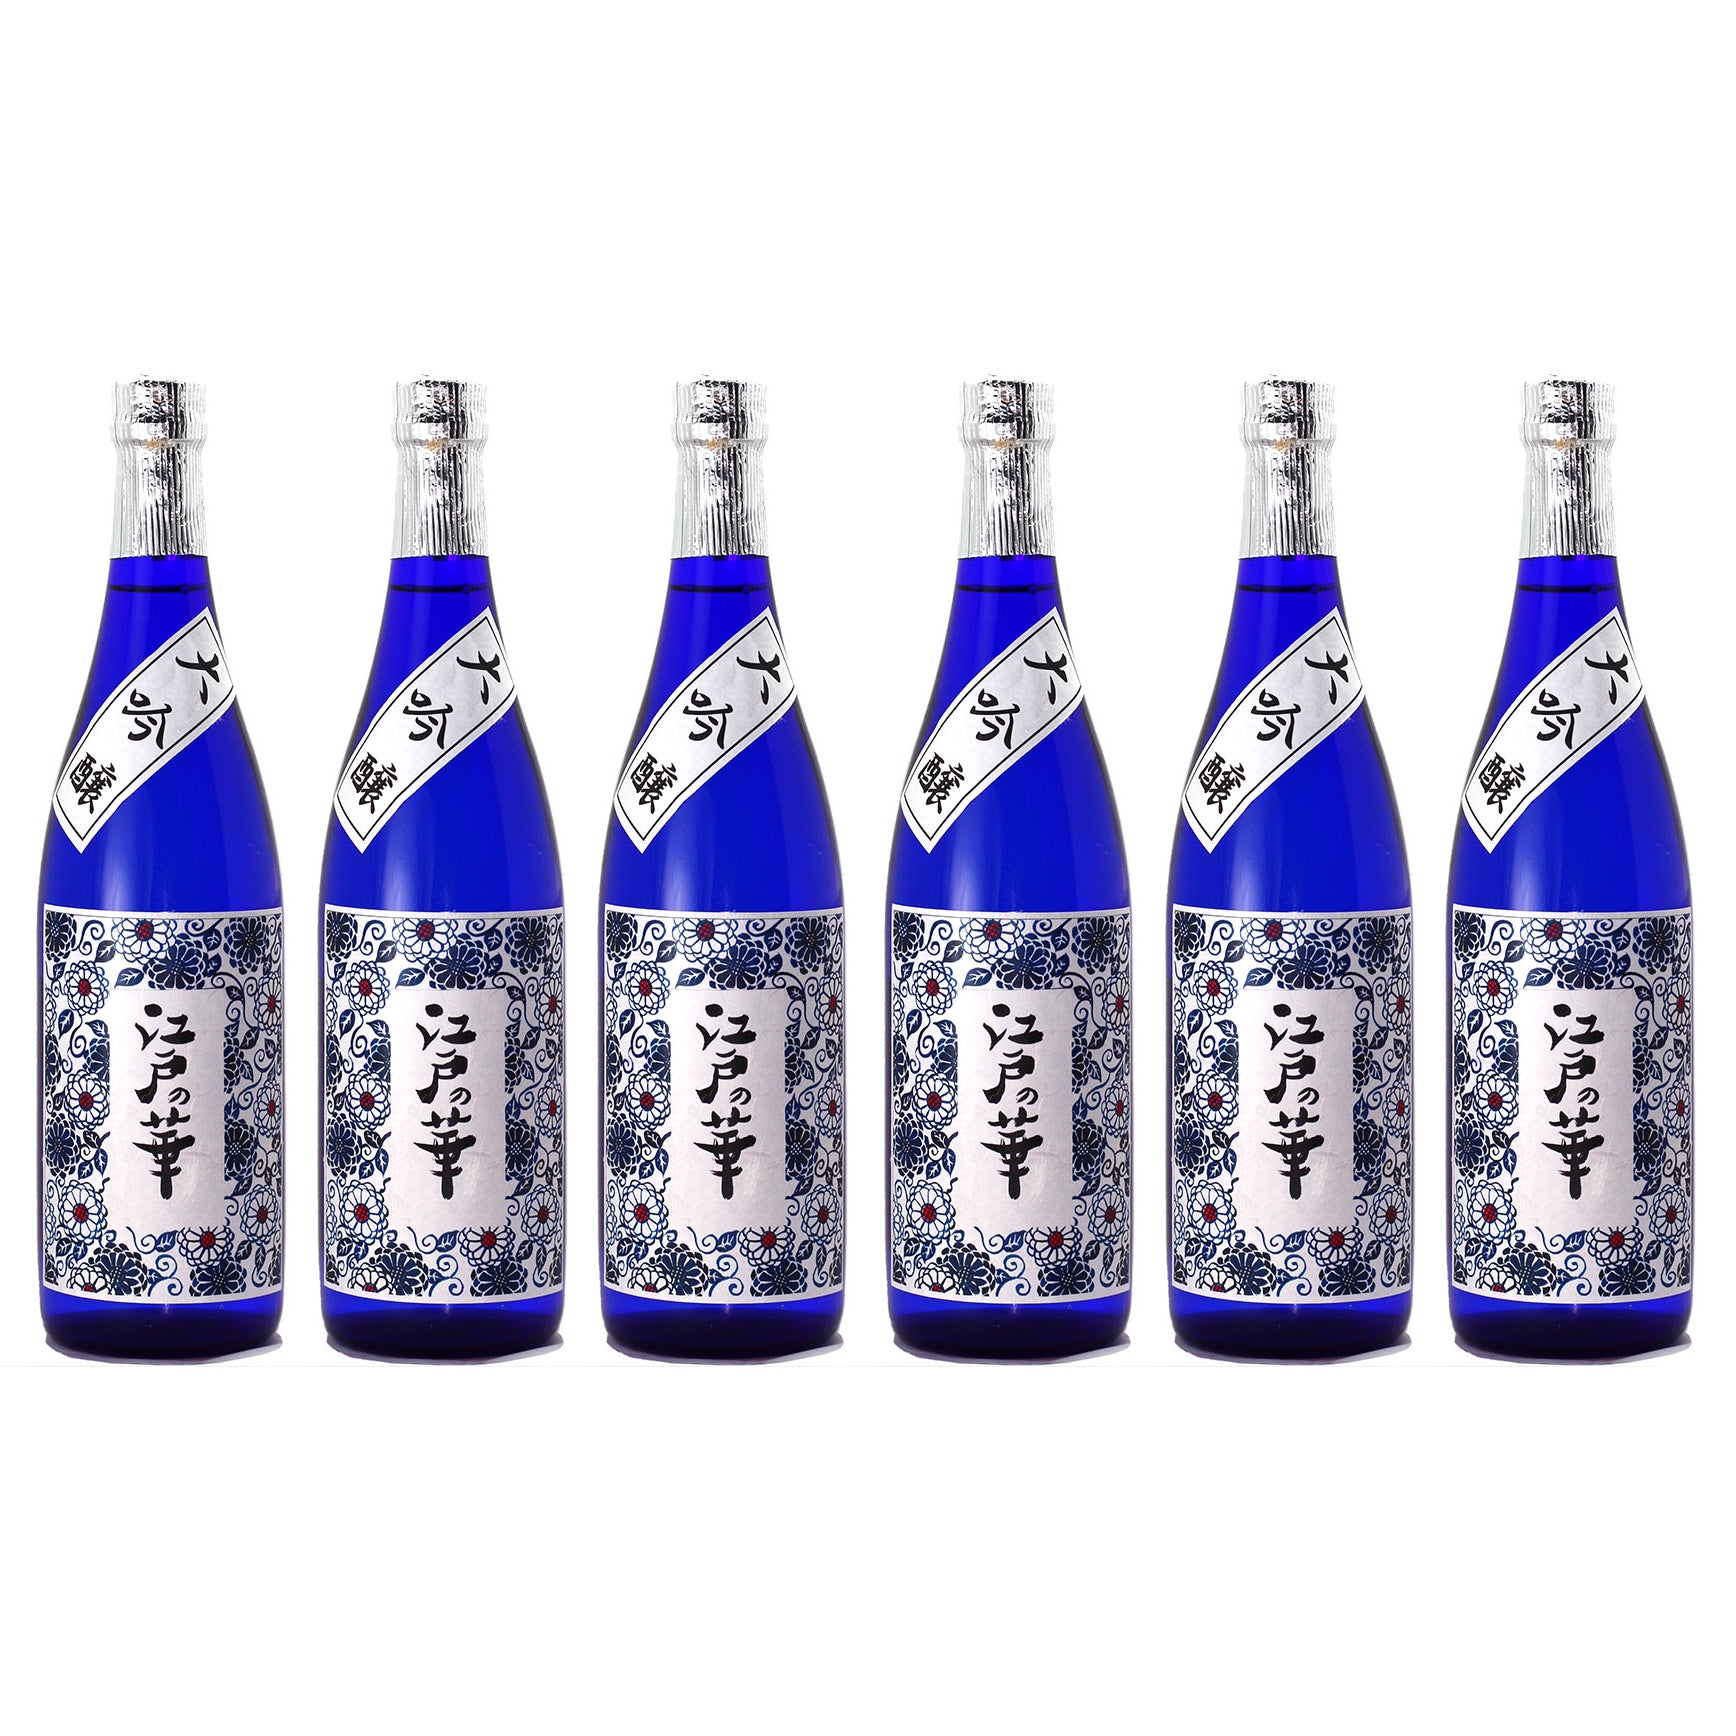 "Edo no Hana" (720ml) x 6 Bottle Pack